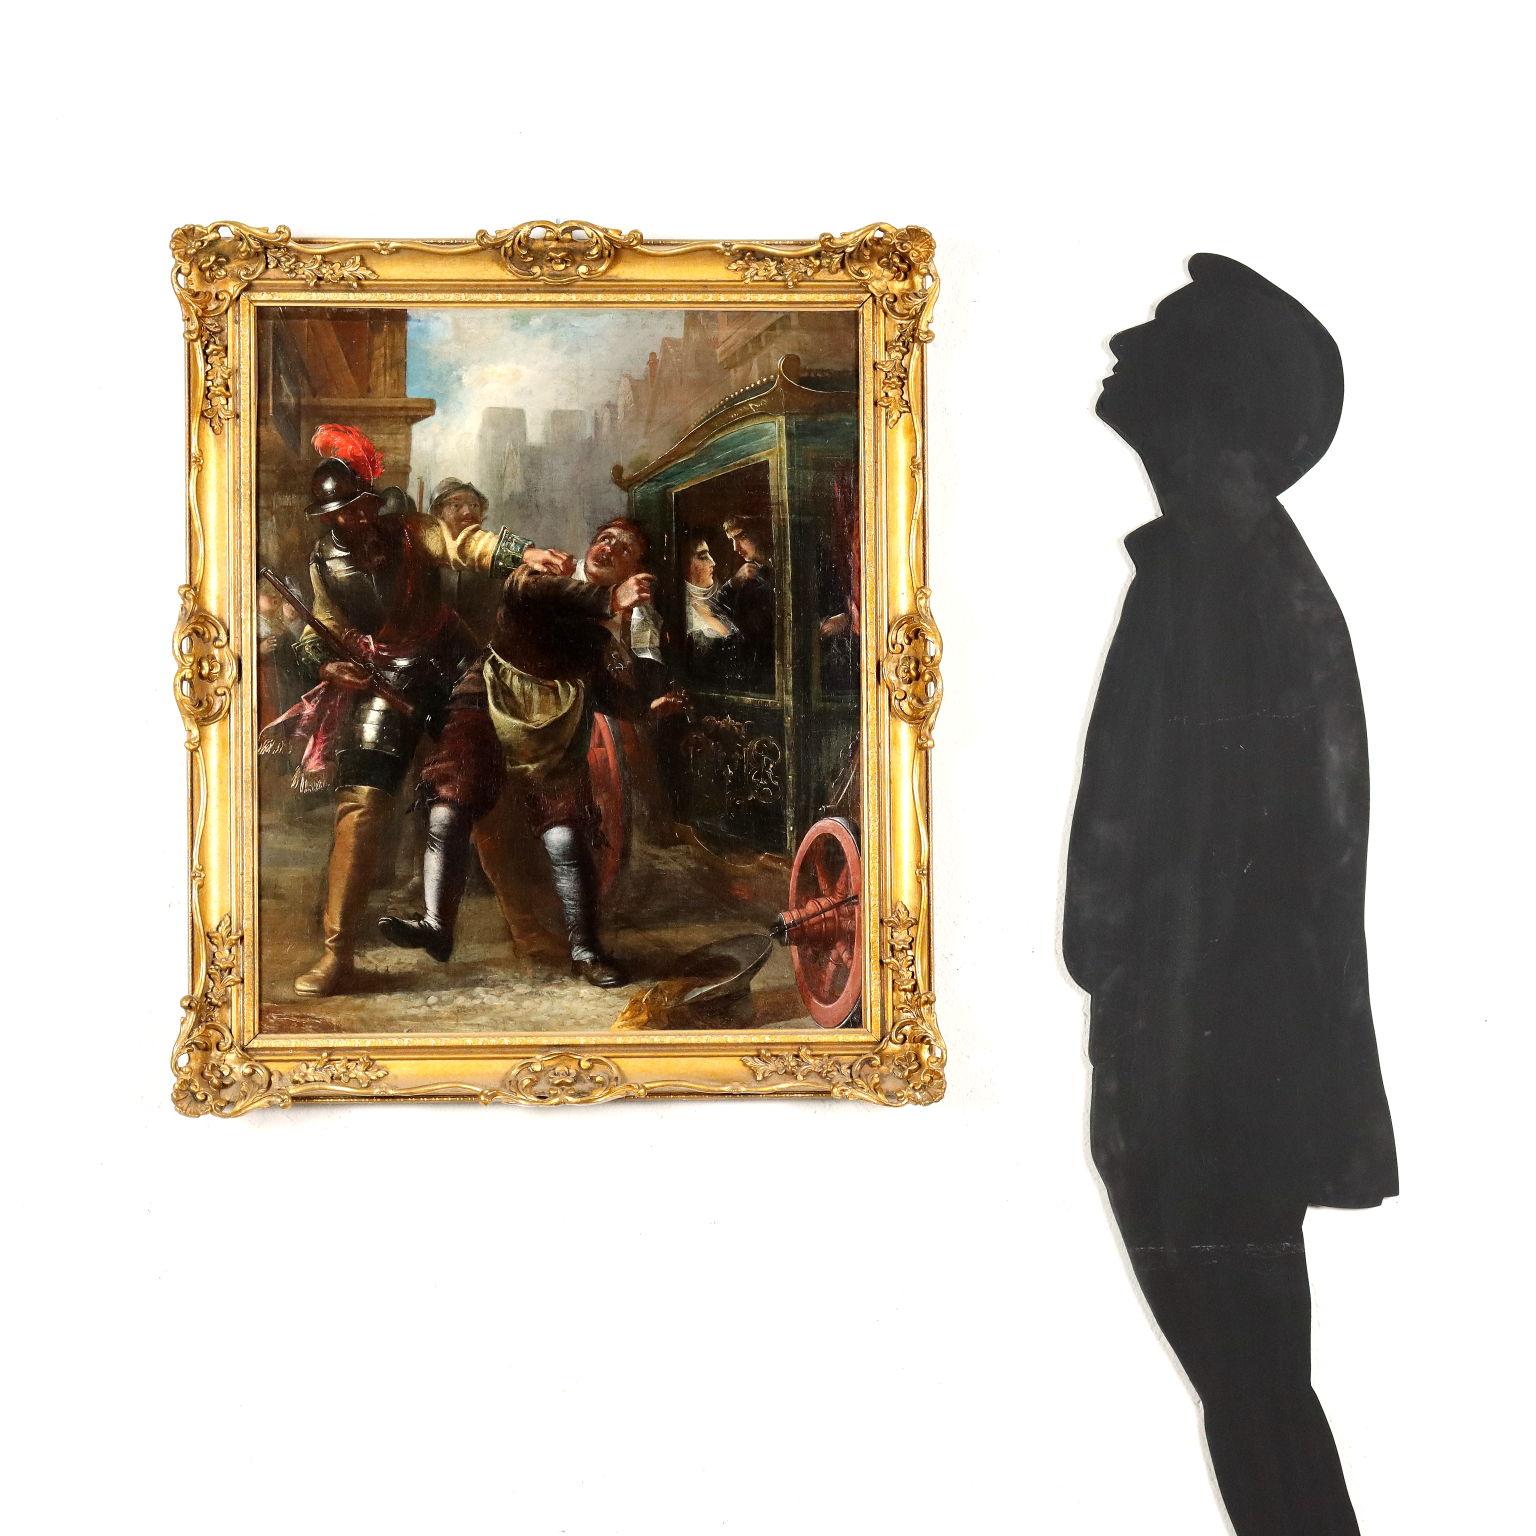 Genre Scene, The Showdown, XIXth century - Painting by Unknown